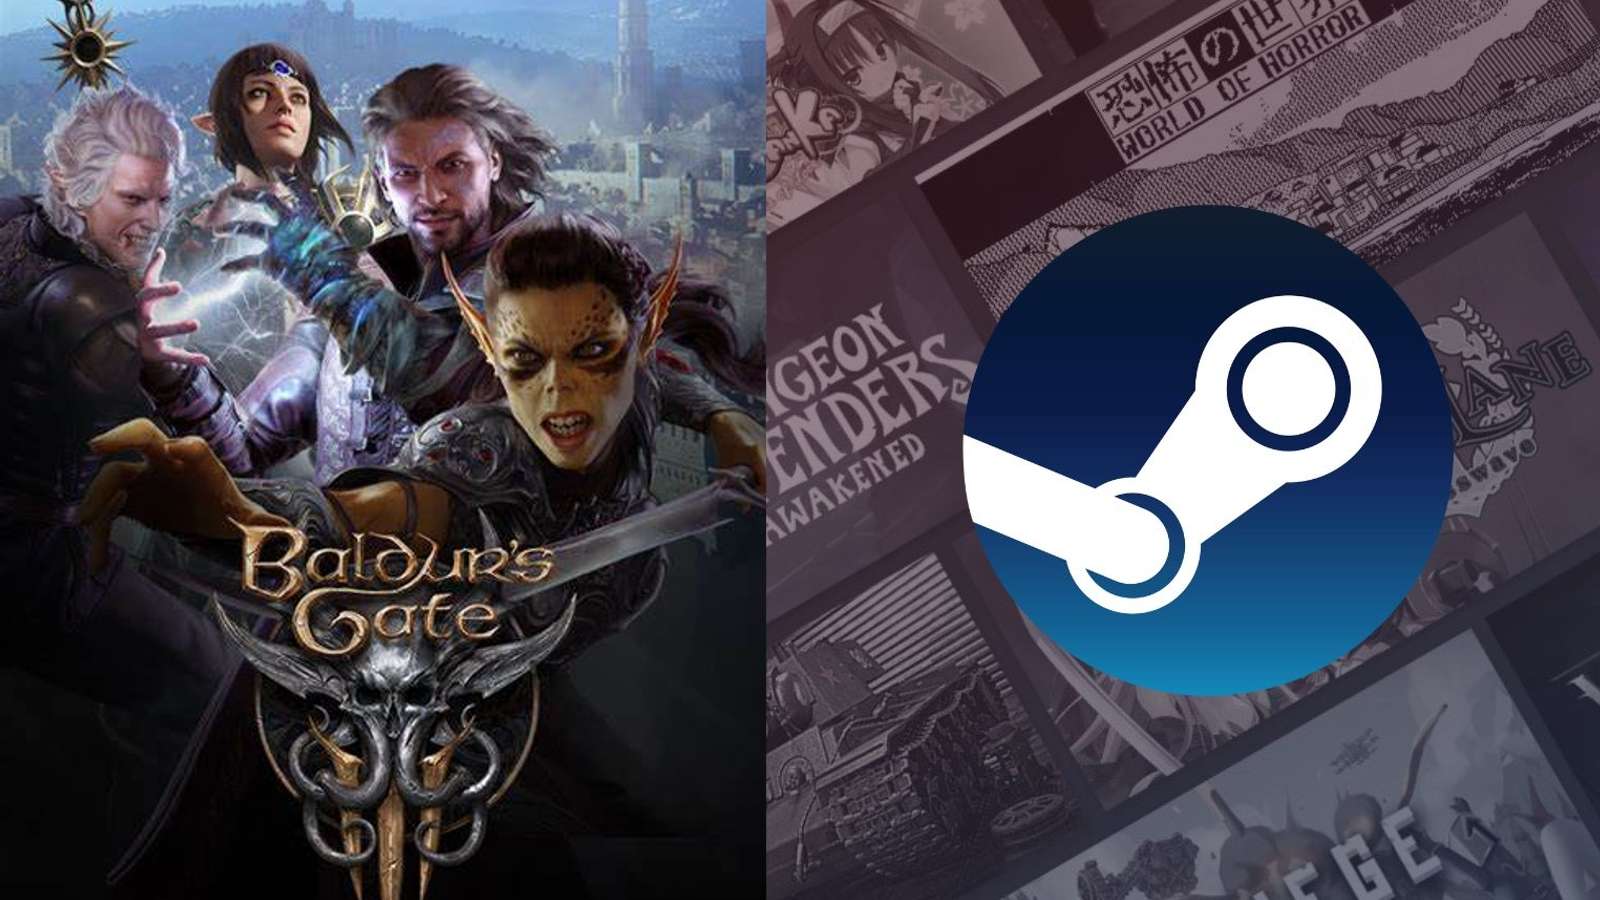 Baldur's Gate 3 Steam Charts Featured Image